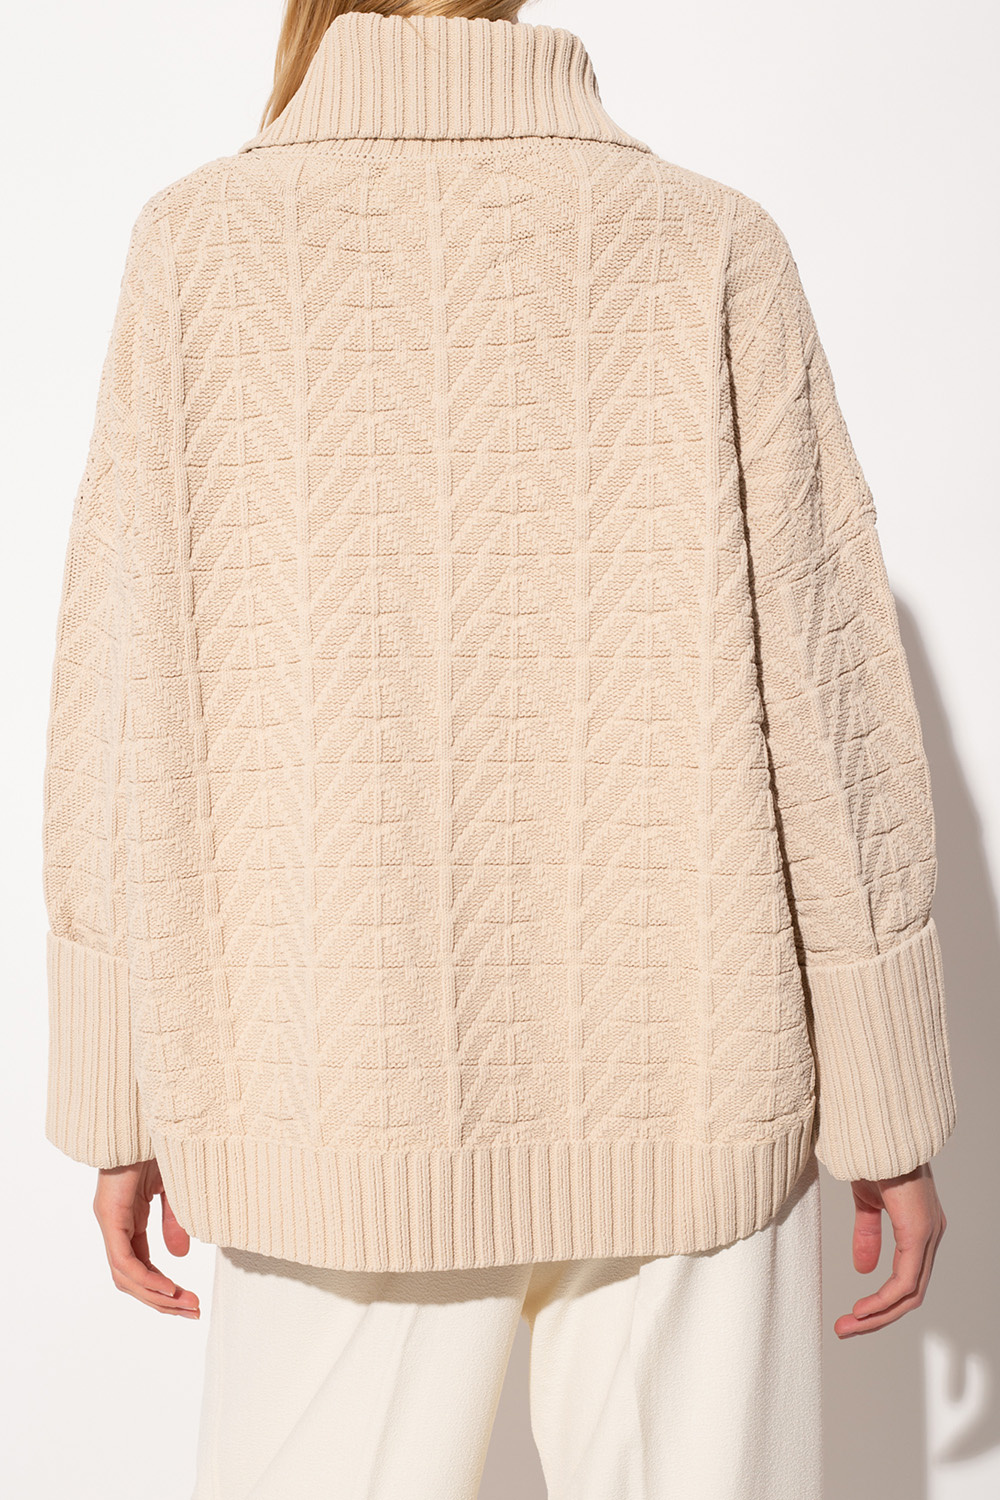 Aeron Turtleneck sweater